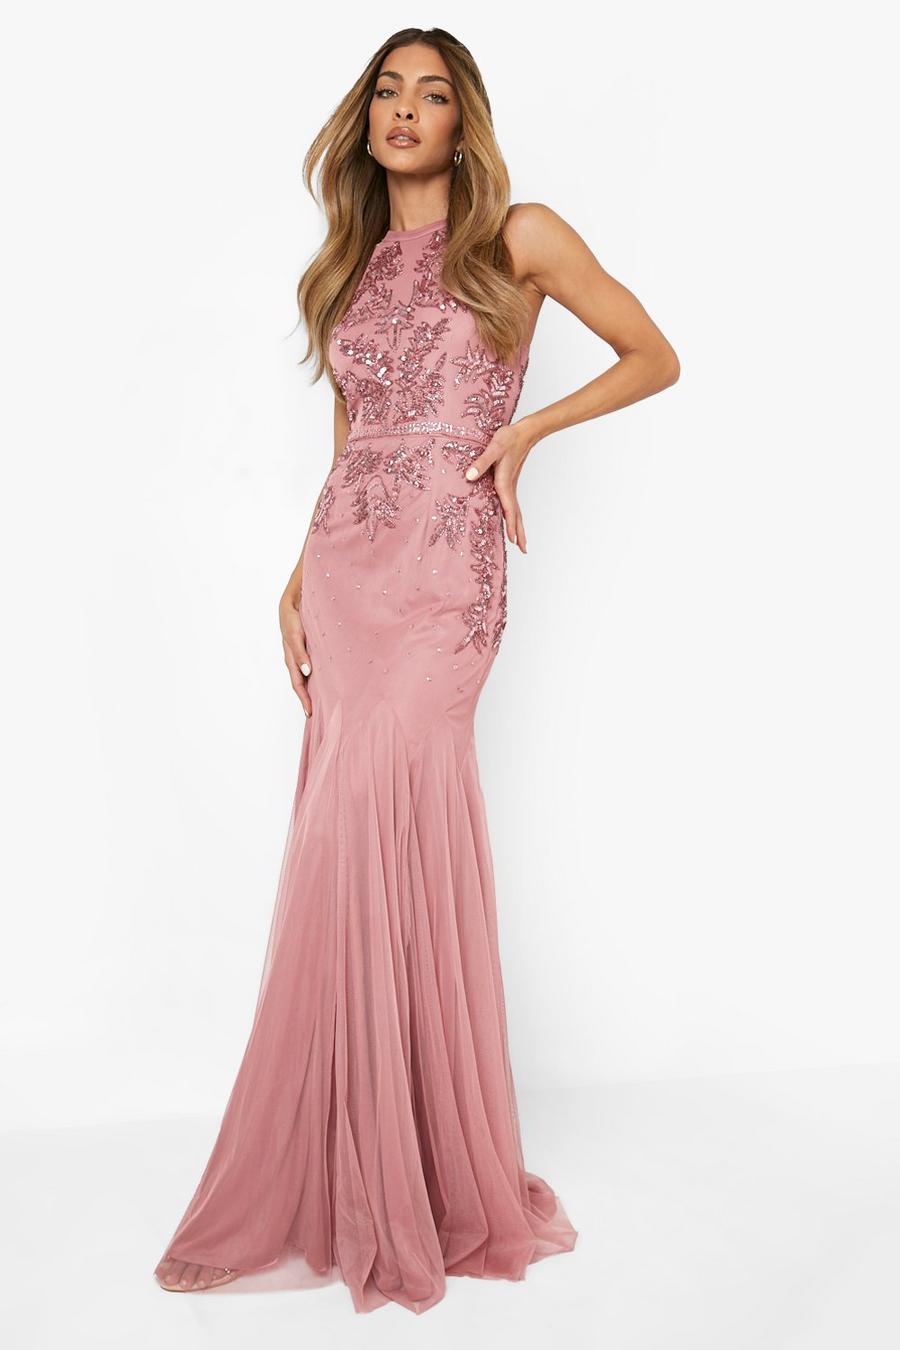 Dusty rose pink Bridesmaid Hand Embellished Halter Maxi Dress